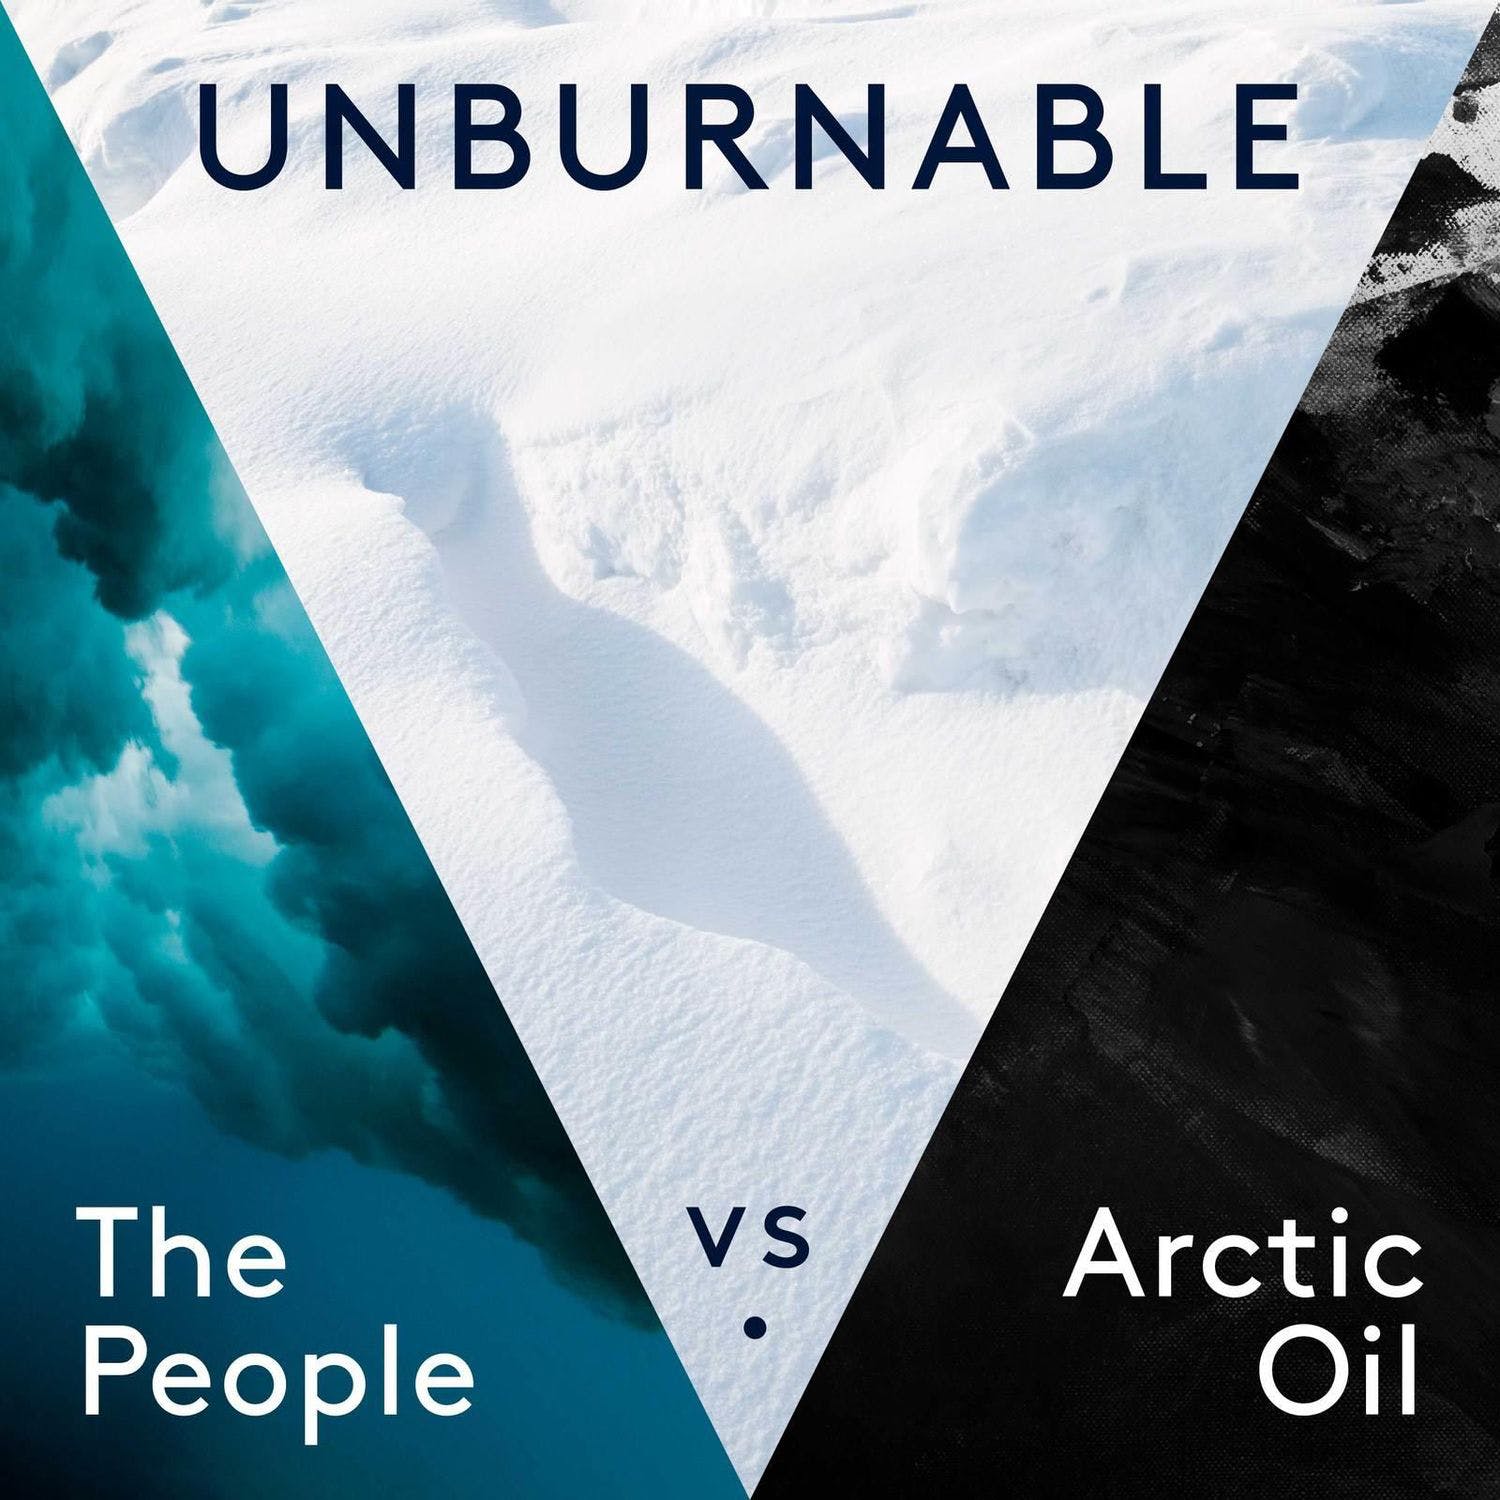 Unburnable: The People vs. Arctic Oil